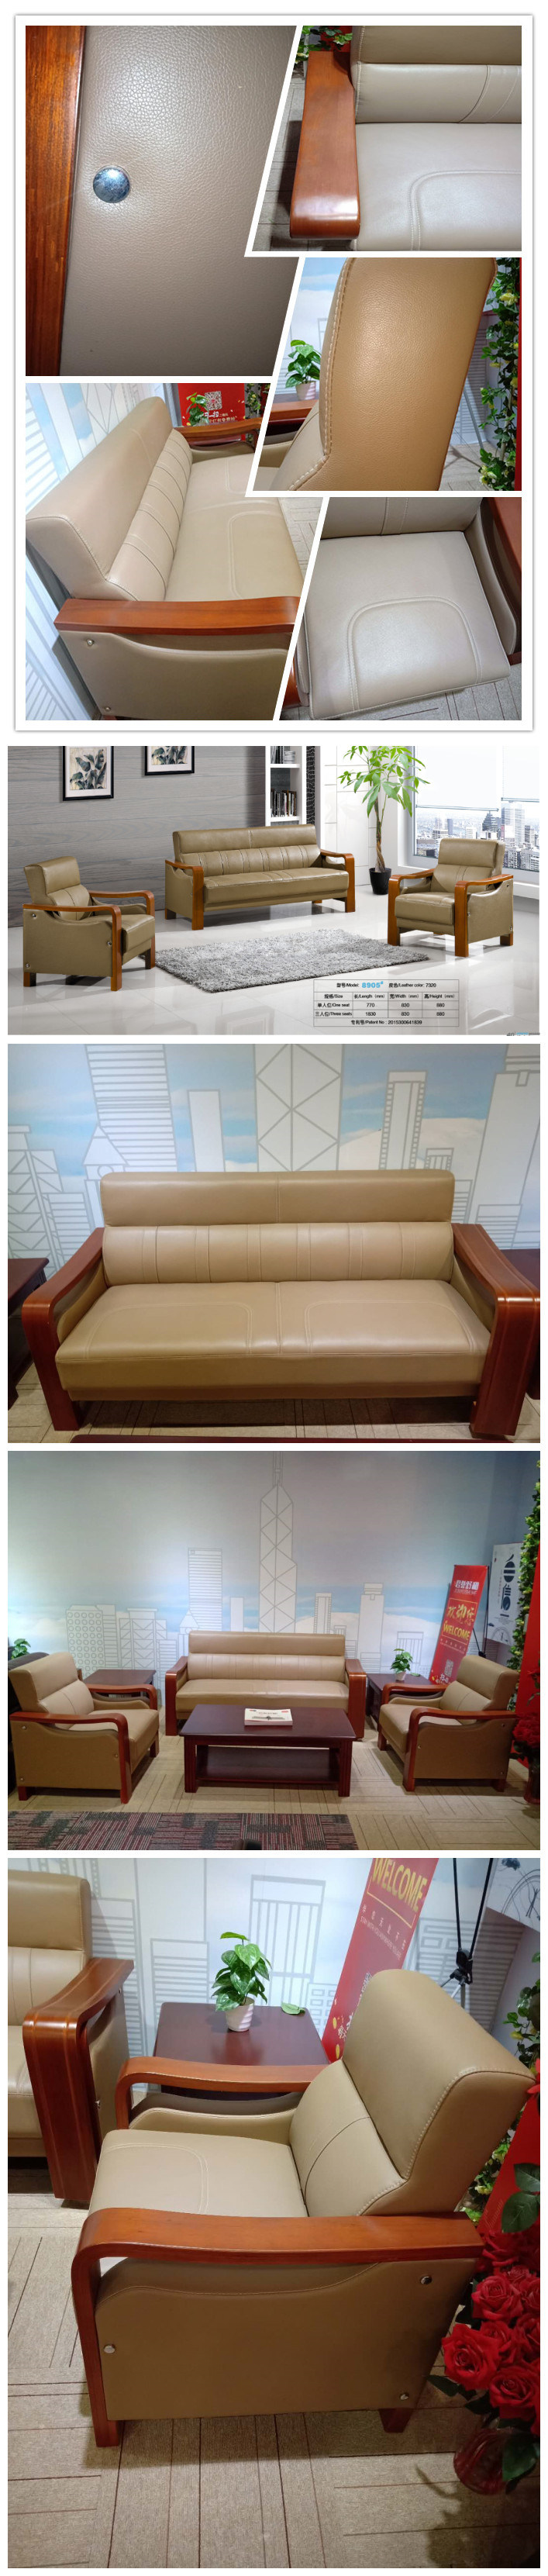 Modern Furniture Design Office Furniture Single PU Sectional Sofa